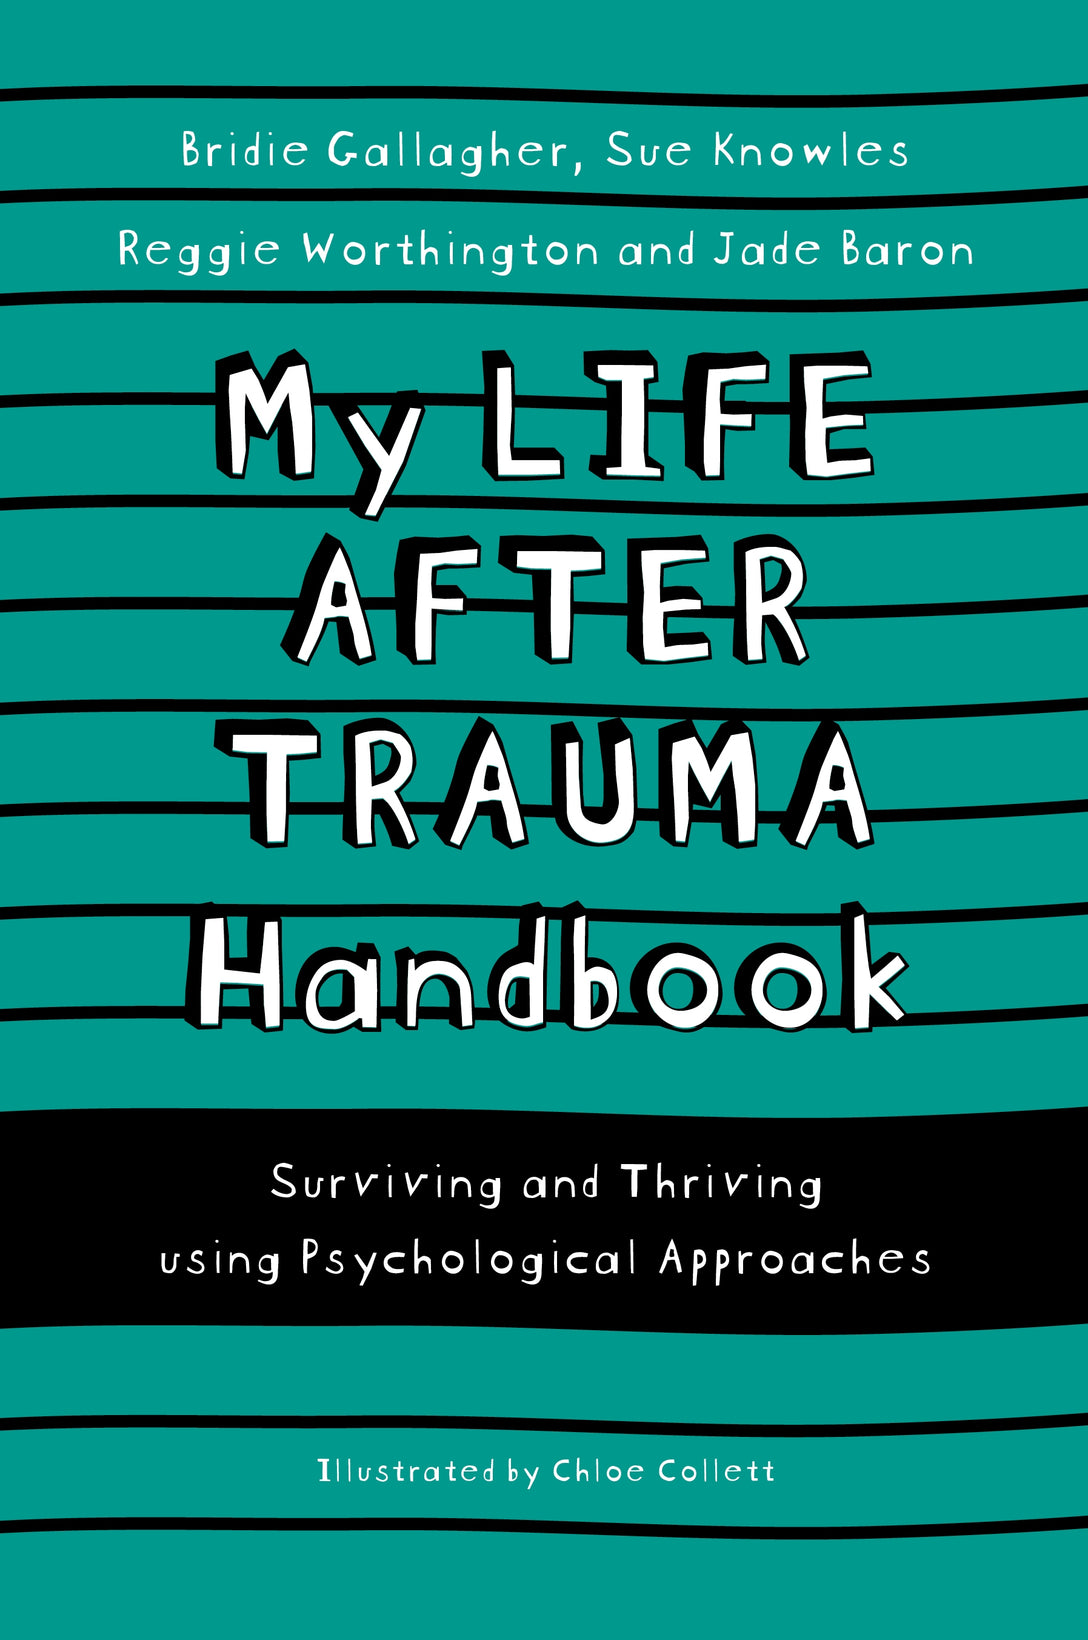 My Life After Trauma Handbook by Sue Knowles, Bridie Gallagher, Jade Baron, Reggie Worthington, Chloe Collett